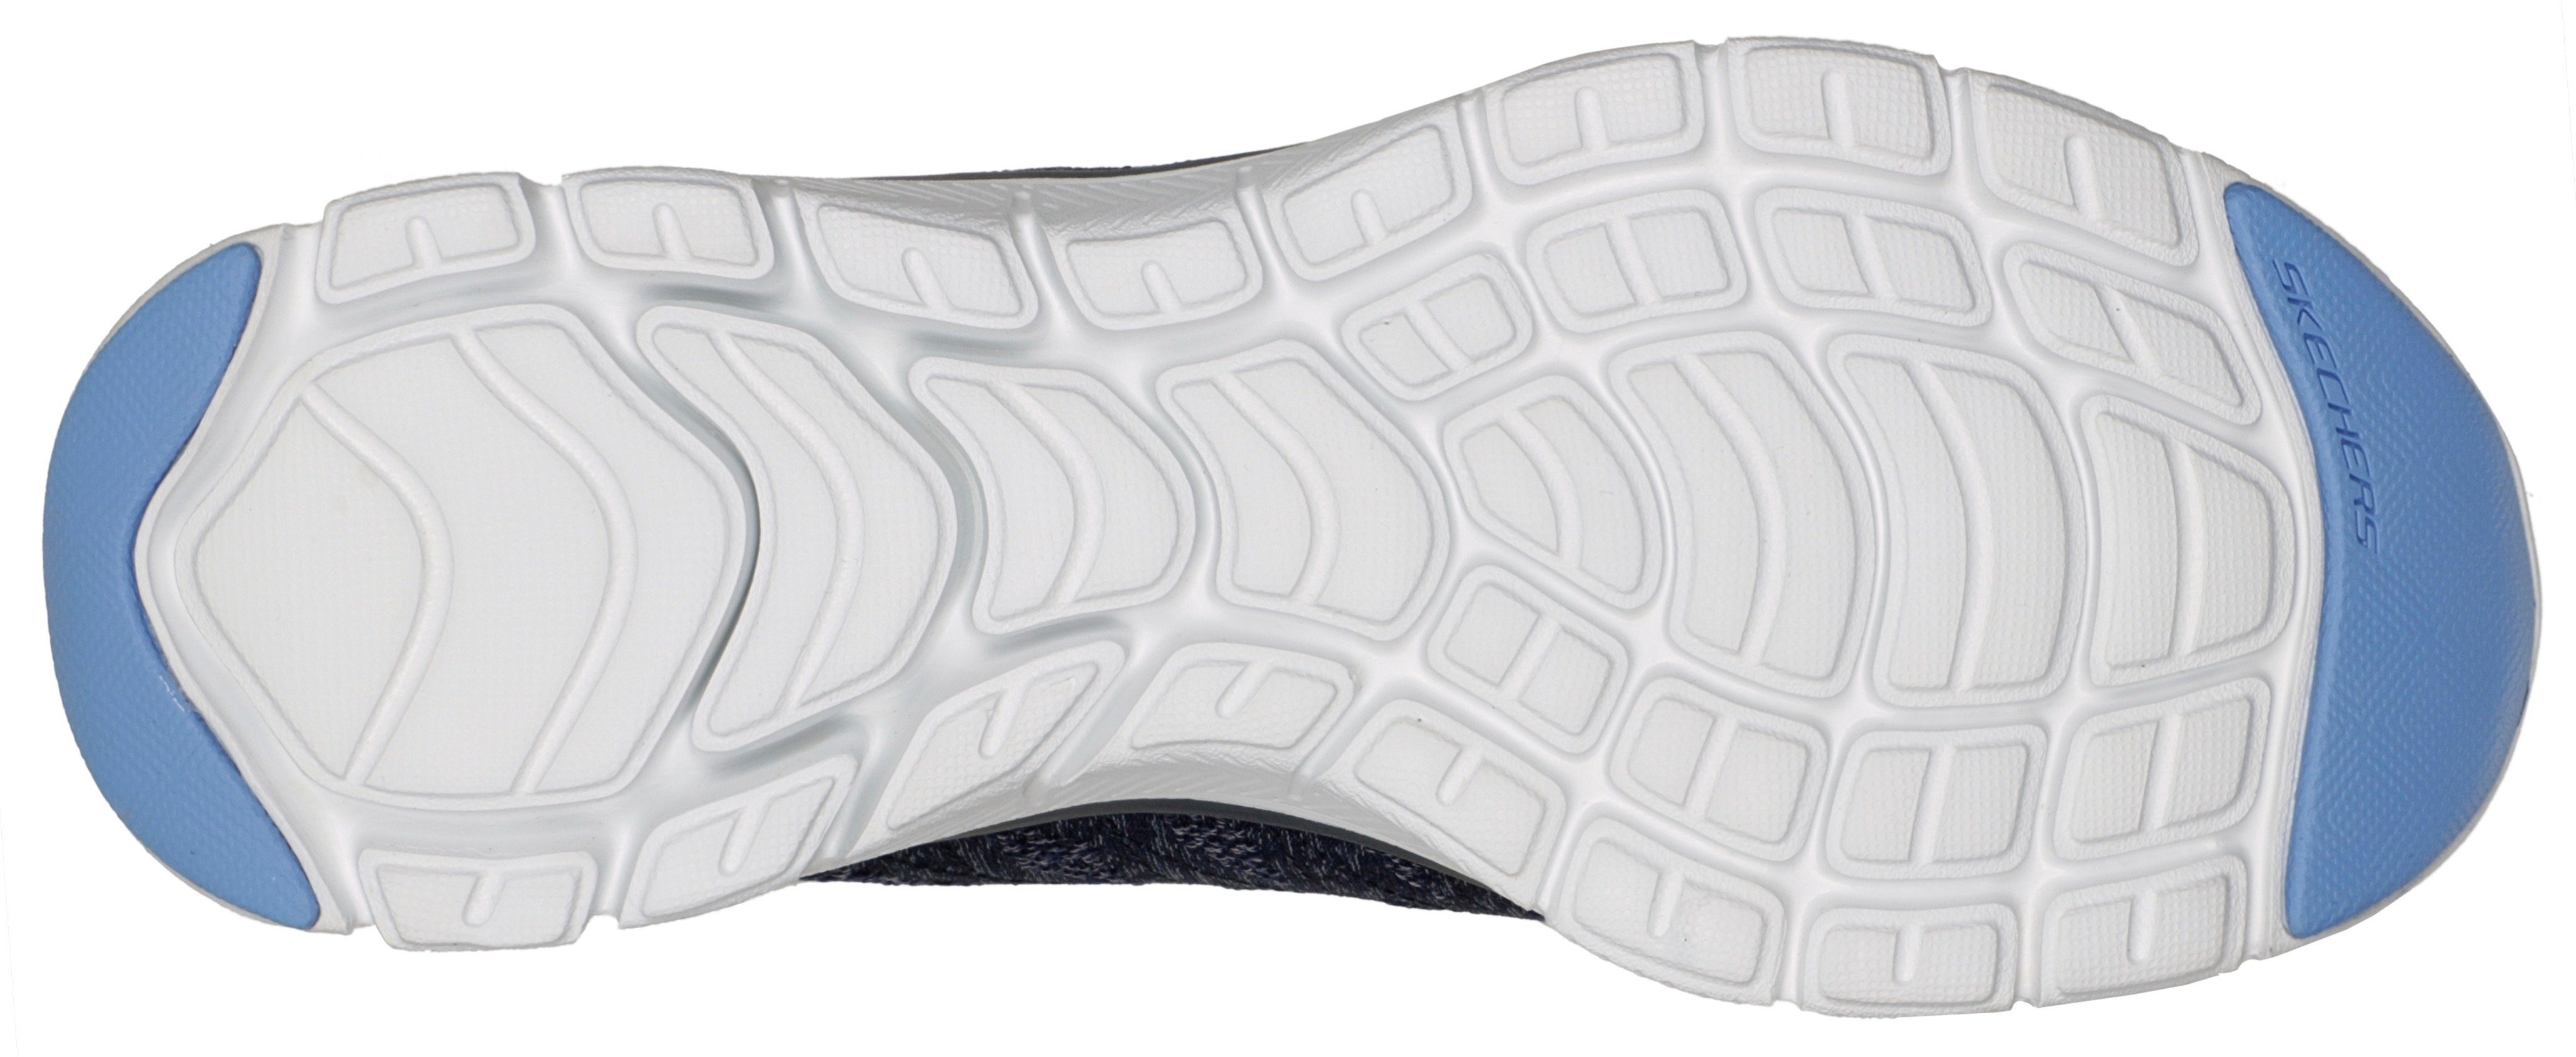 Foam Air MOVE FRESH 4.0 Sneaker Skechers APEEAL Cooled FLEX navy mit Memory